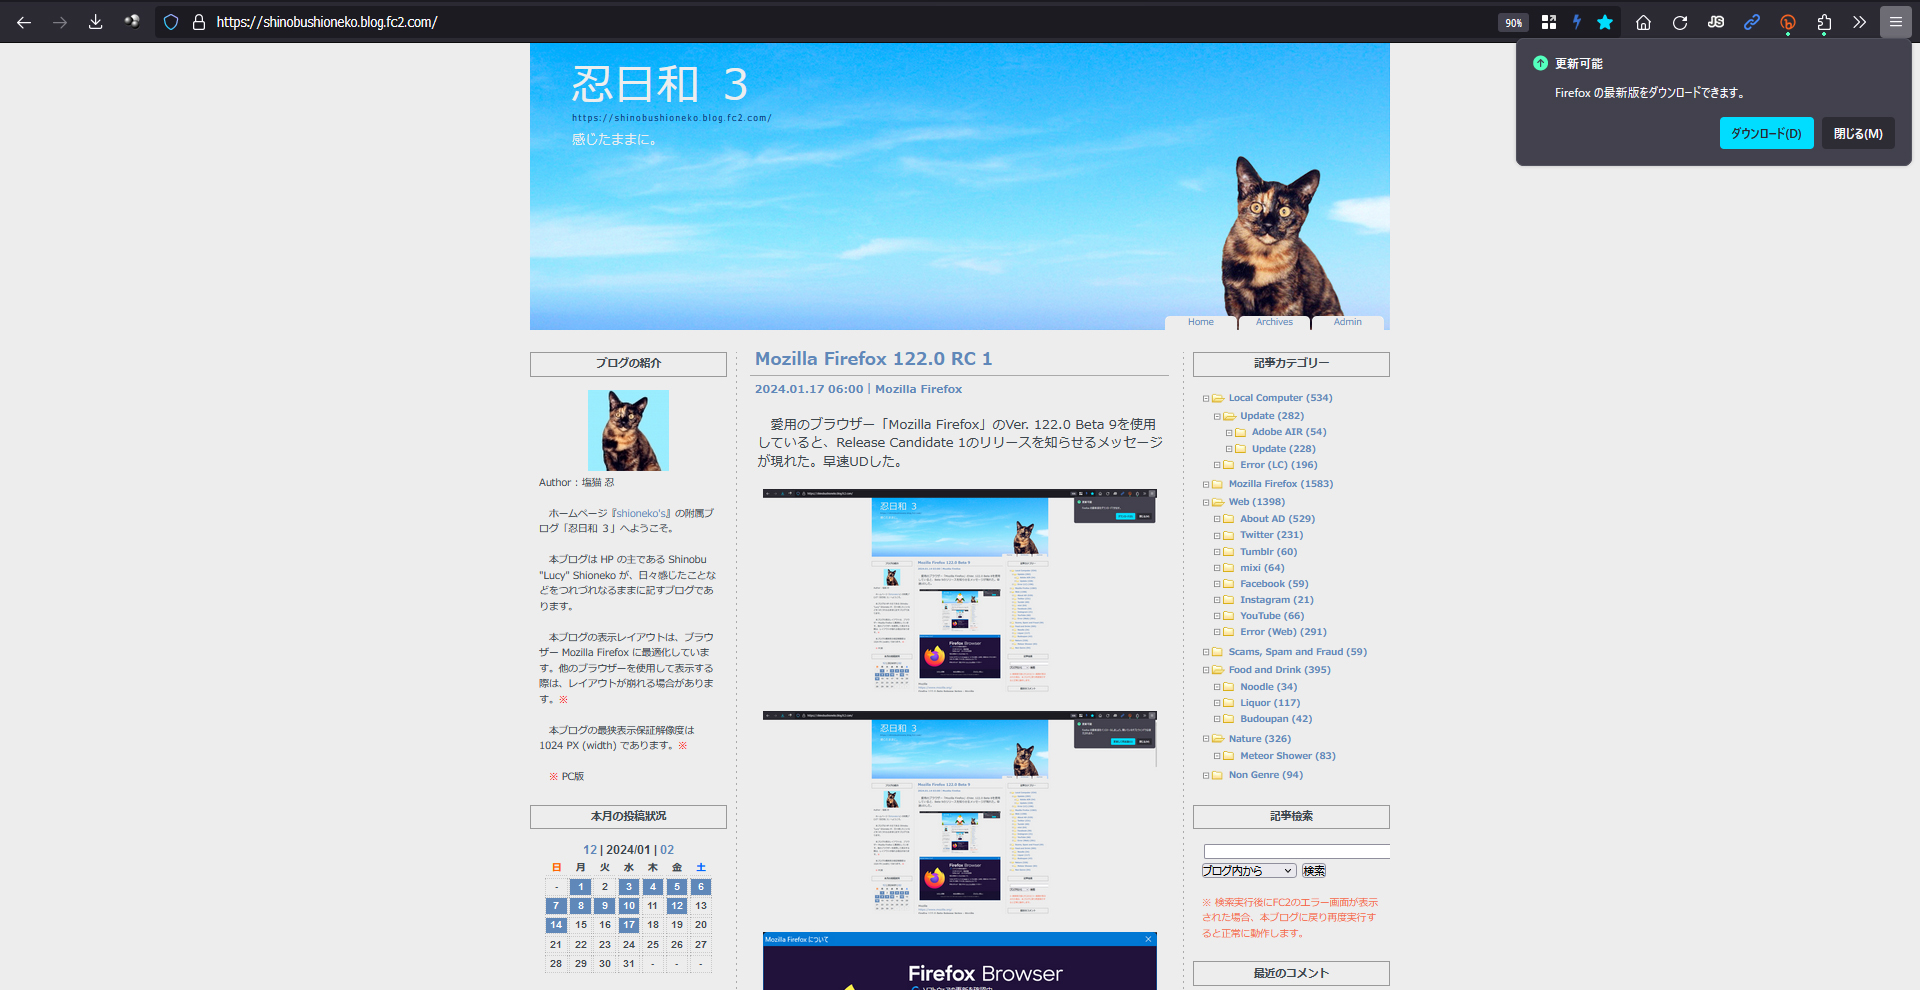 Mozilla Firefox 122.0 RC 2